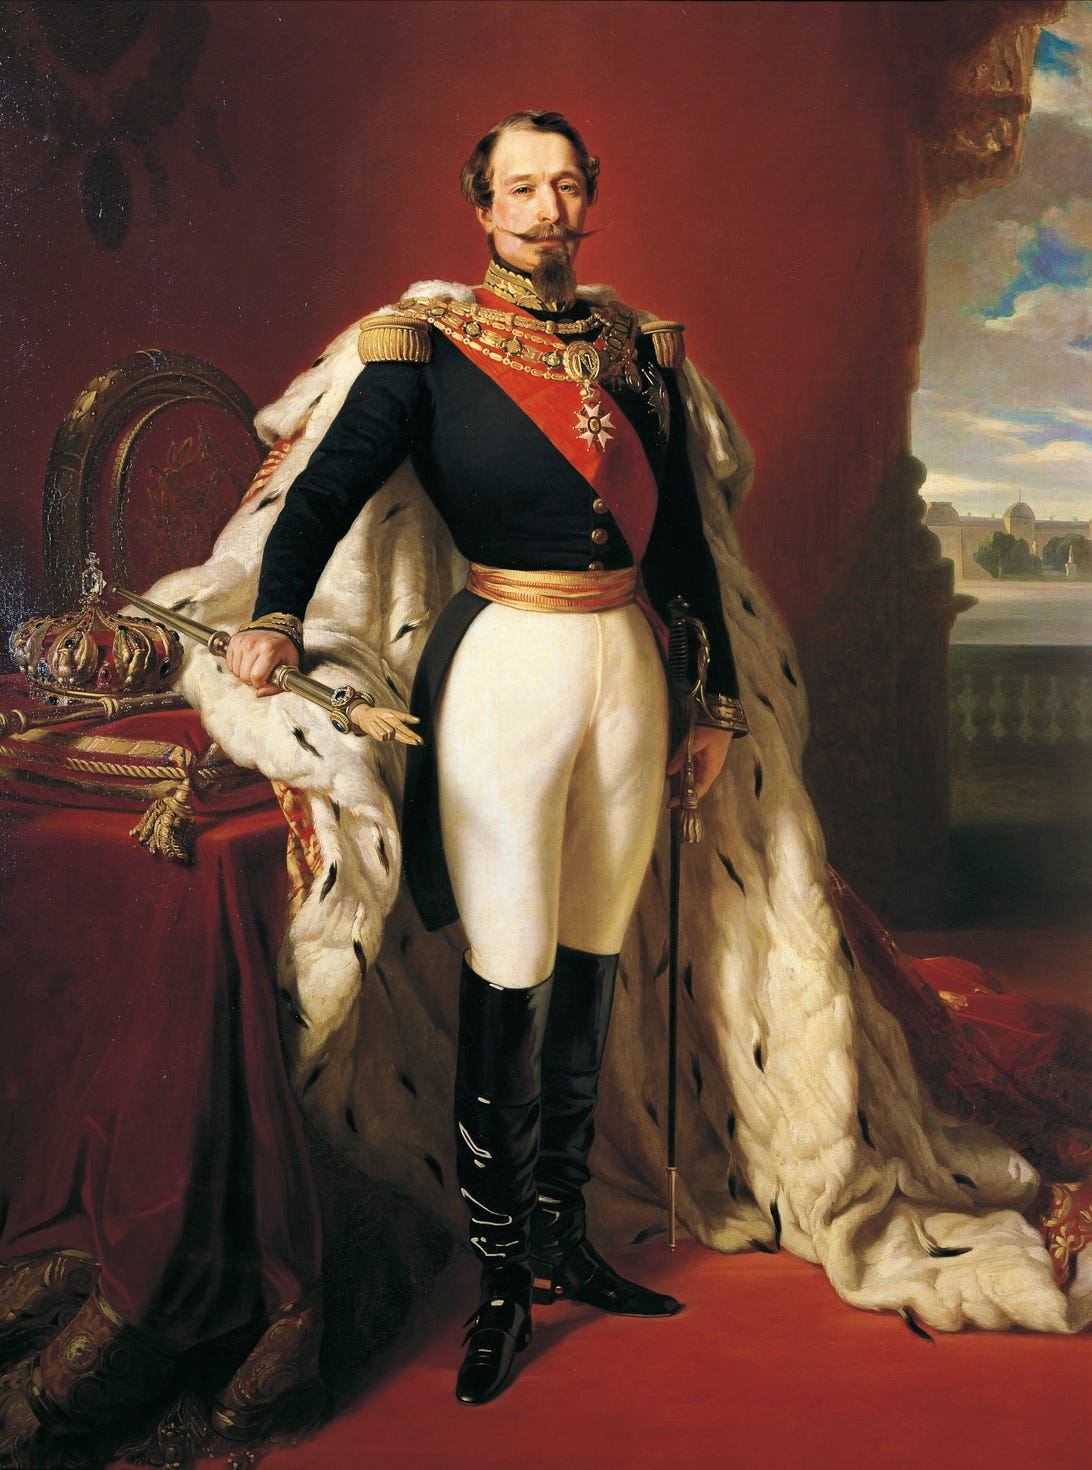 Painting of Napoleon III by Franz Xaver Winterhalter